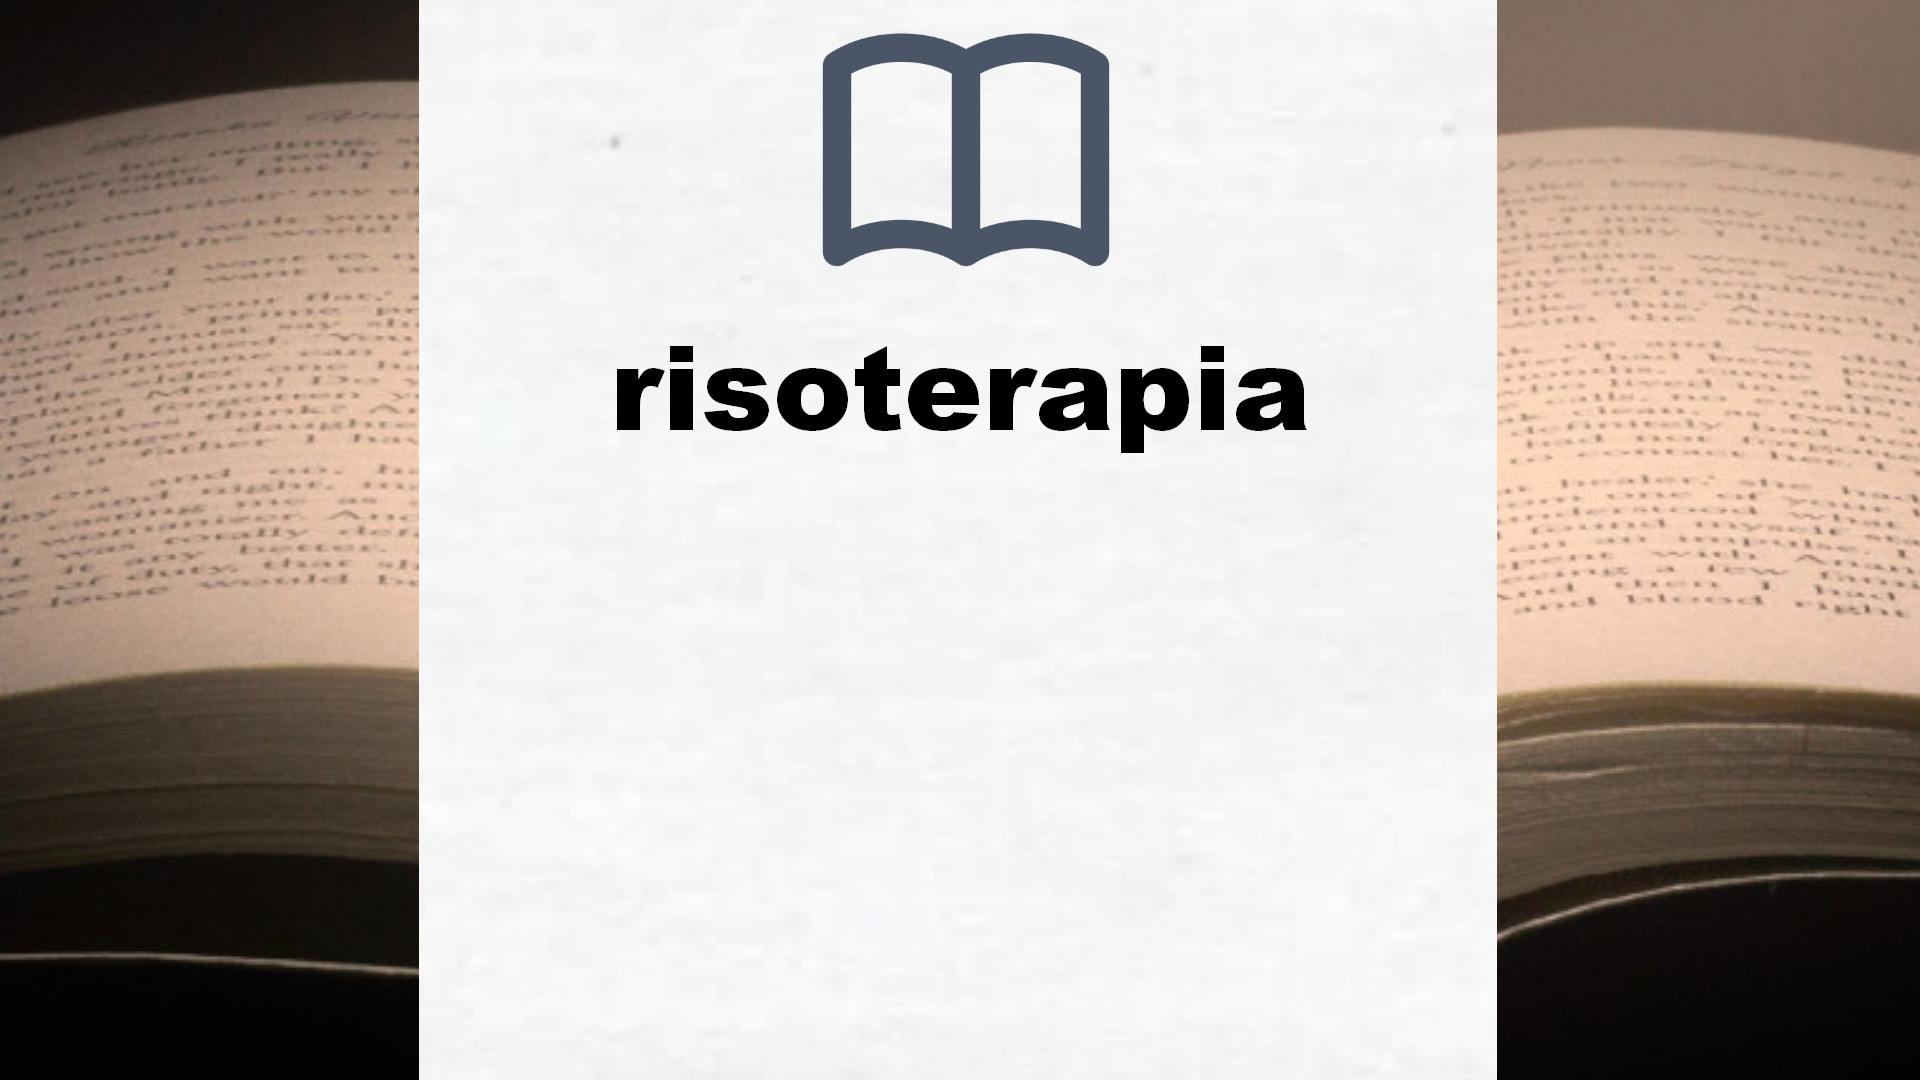 Libros sobre risoterapia